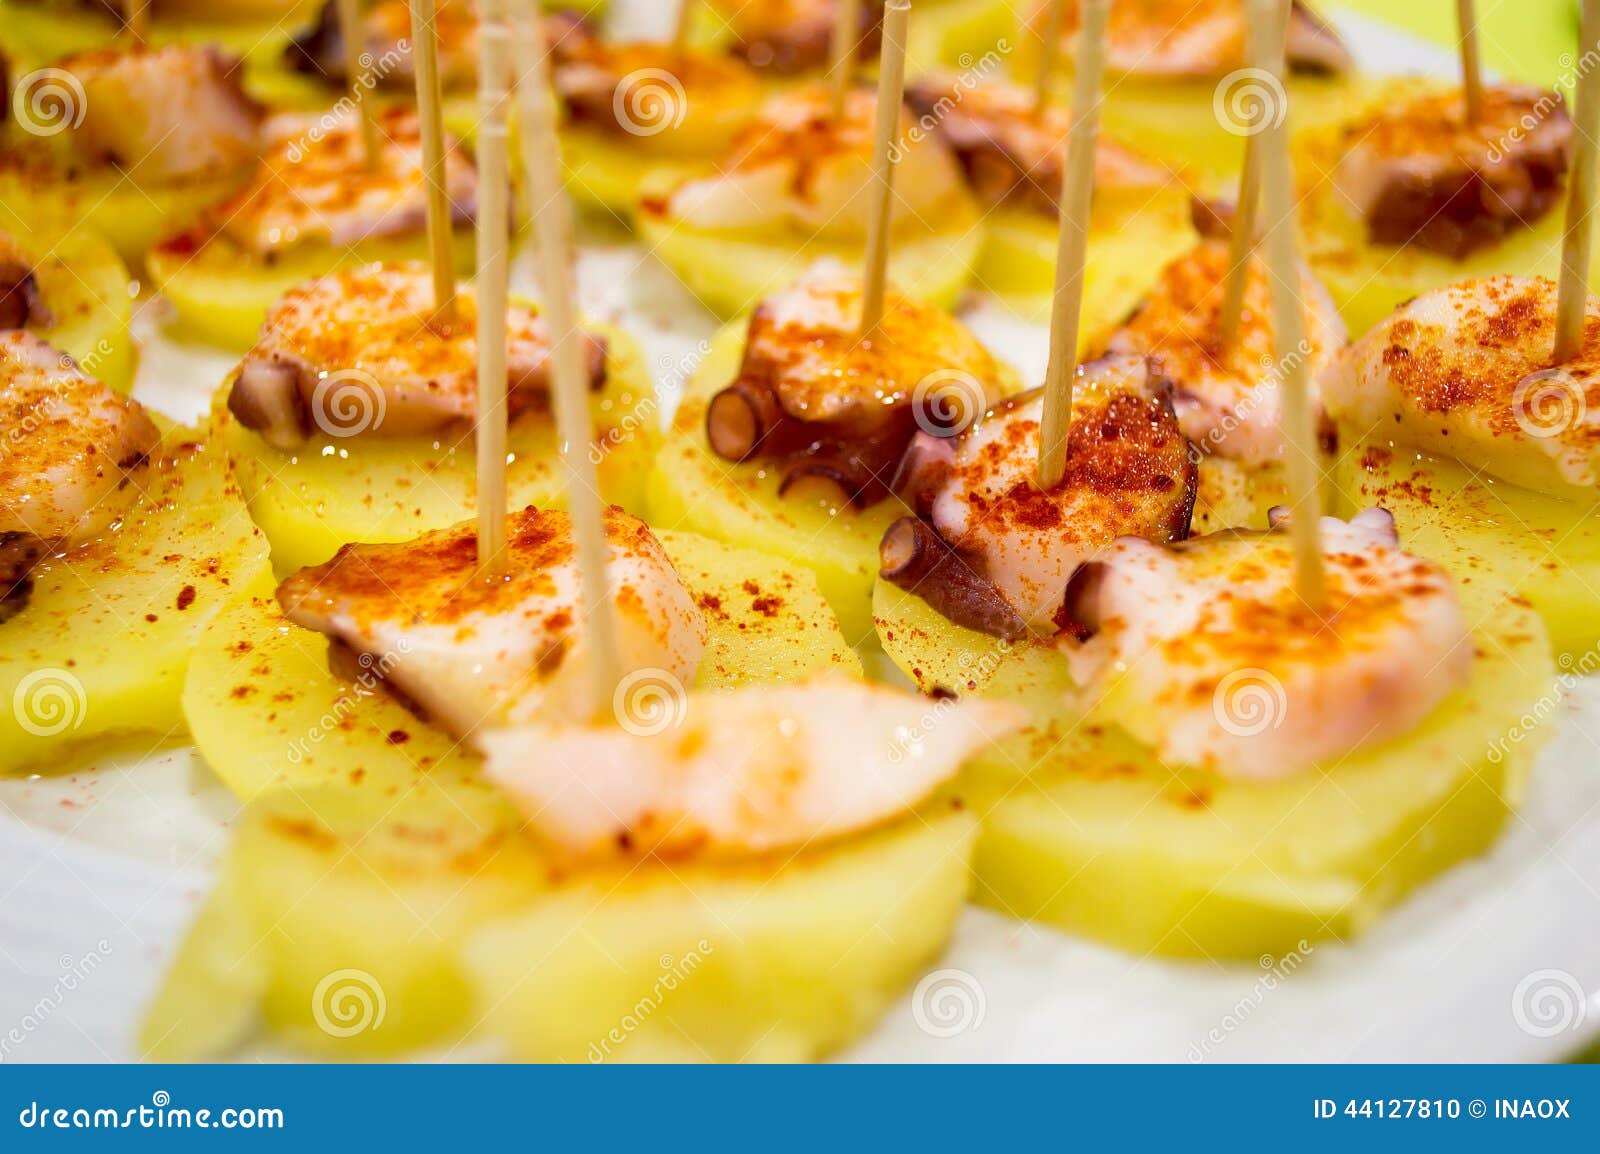 pintxo of spanish octopus with potato and paprika